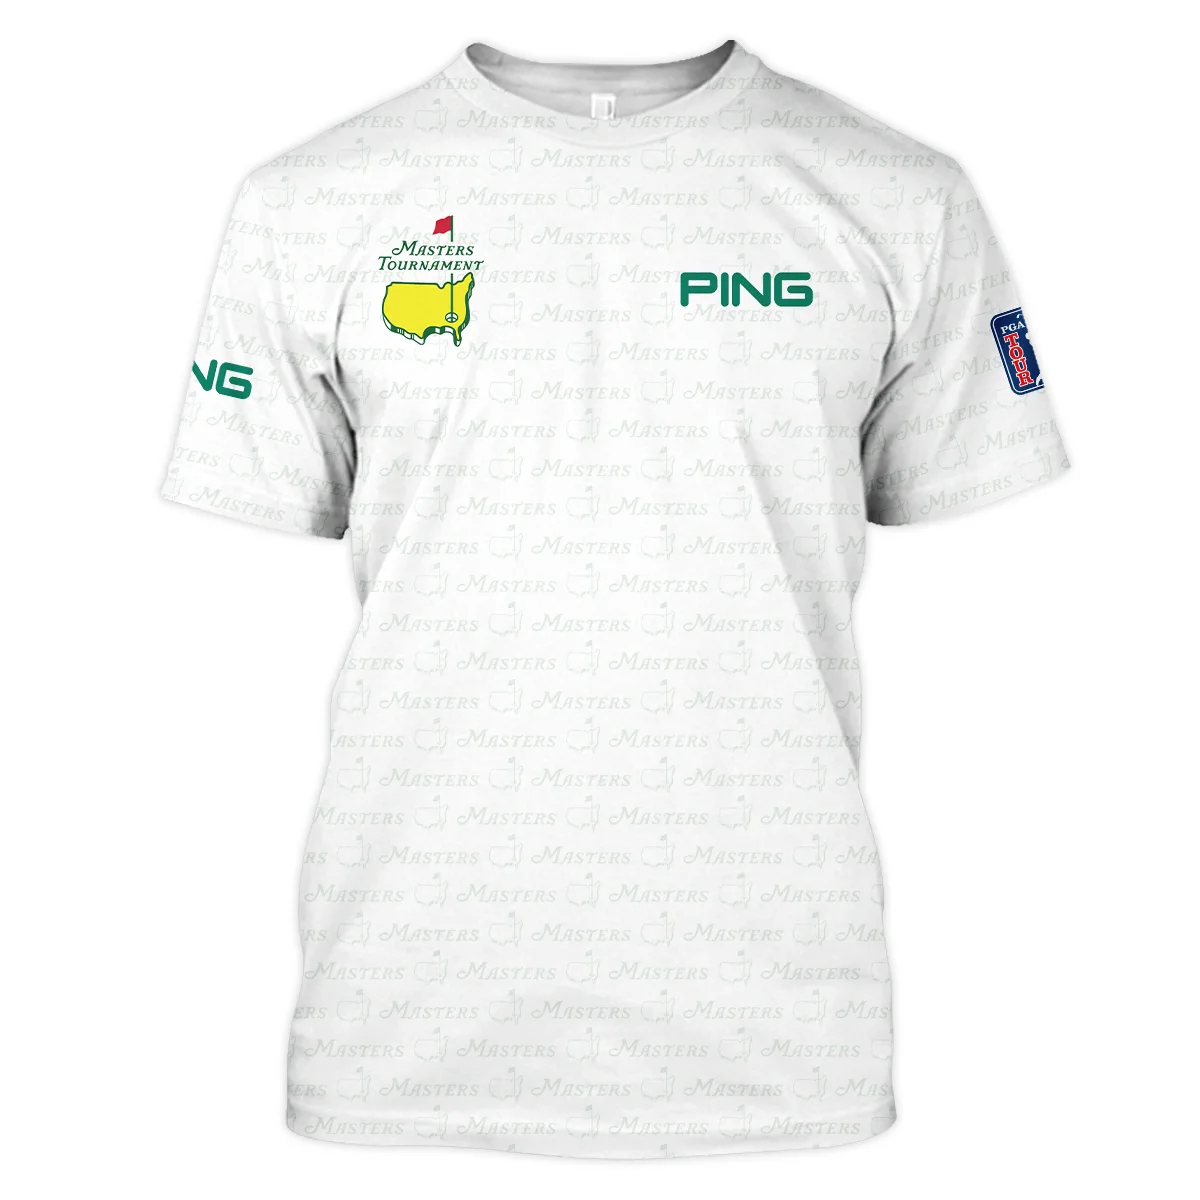 Pattern Masters Tournament Ping Unisex Sweatshirt White Green Sport Love Clothing Sweatshirt